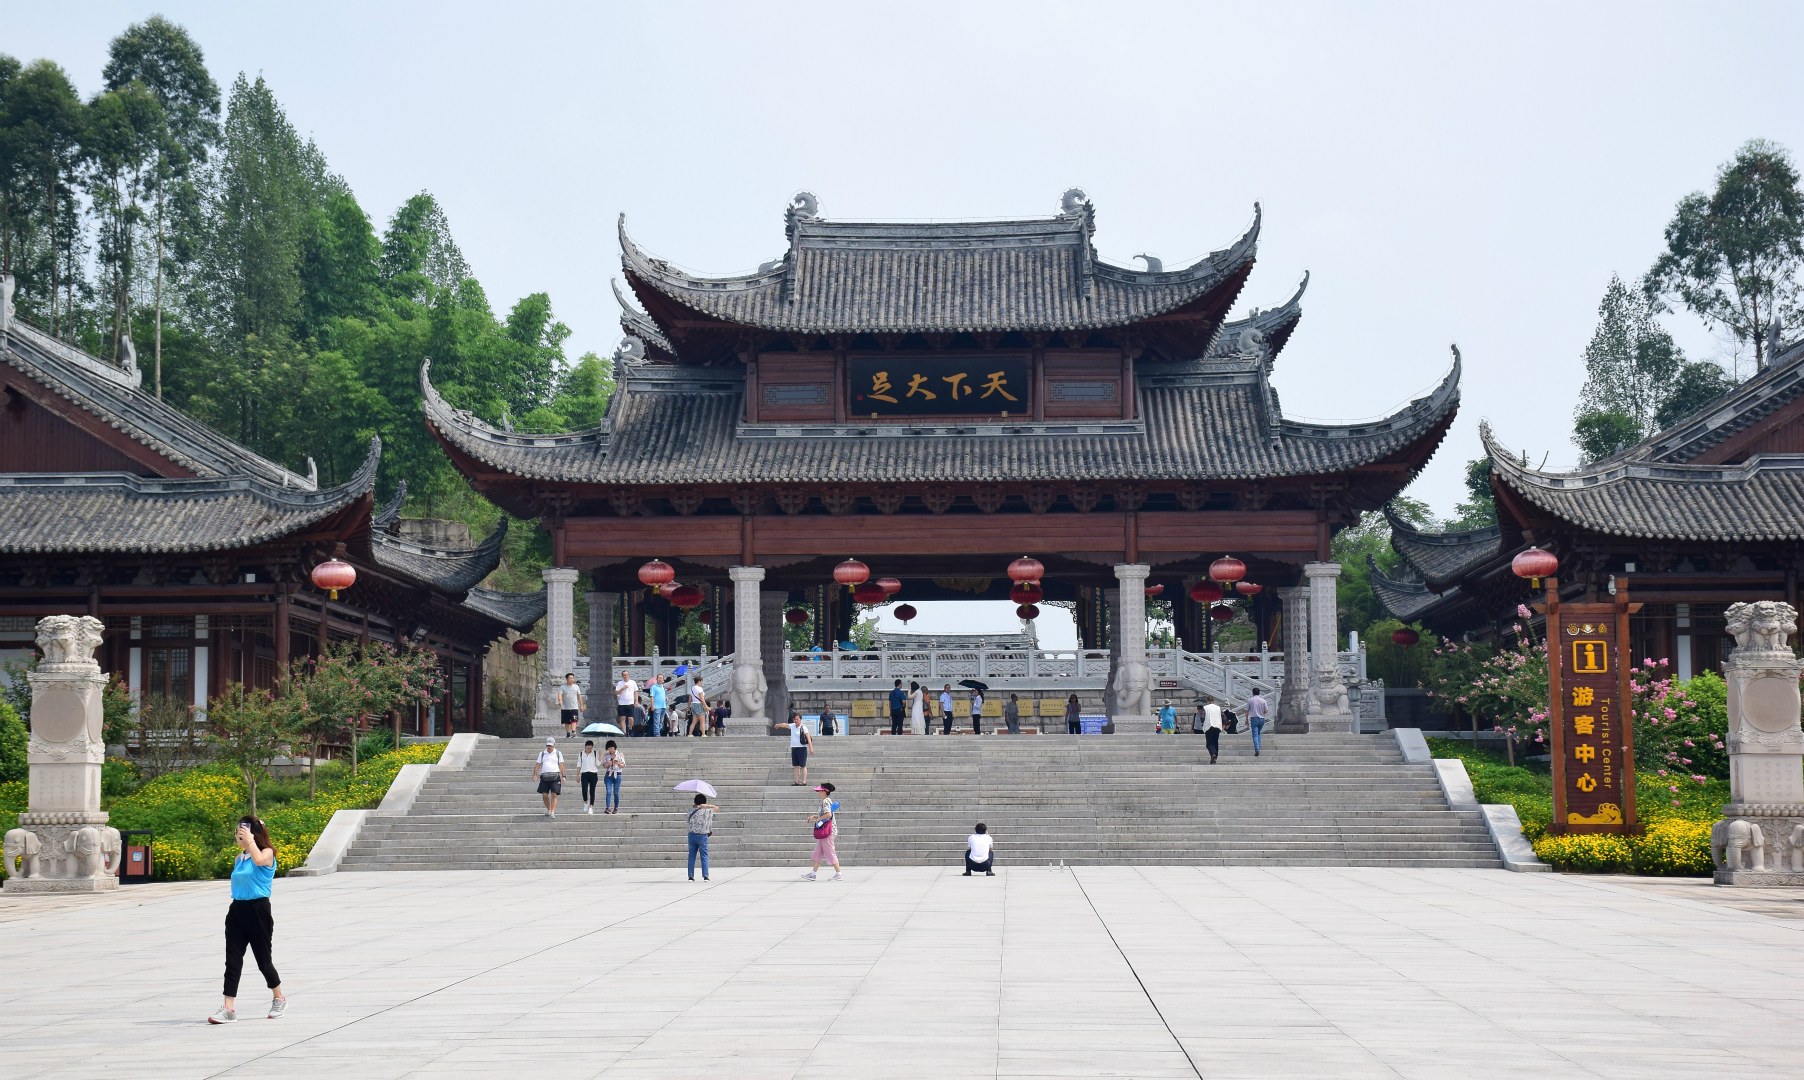 Entrance, Dazu Rock Carvings Museum, Chongqing